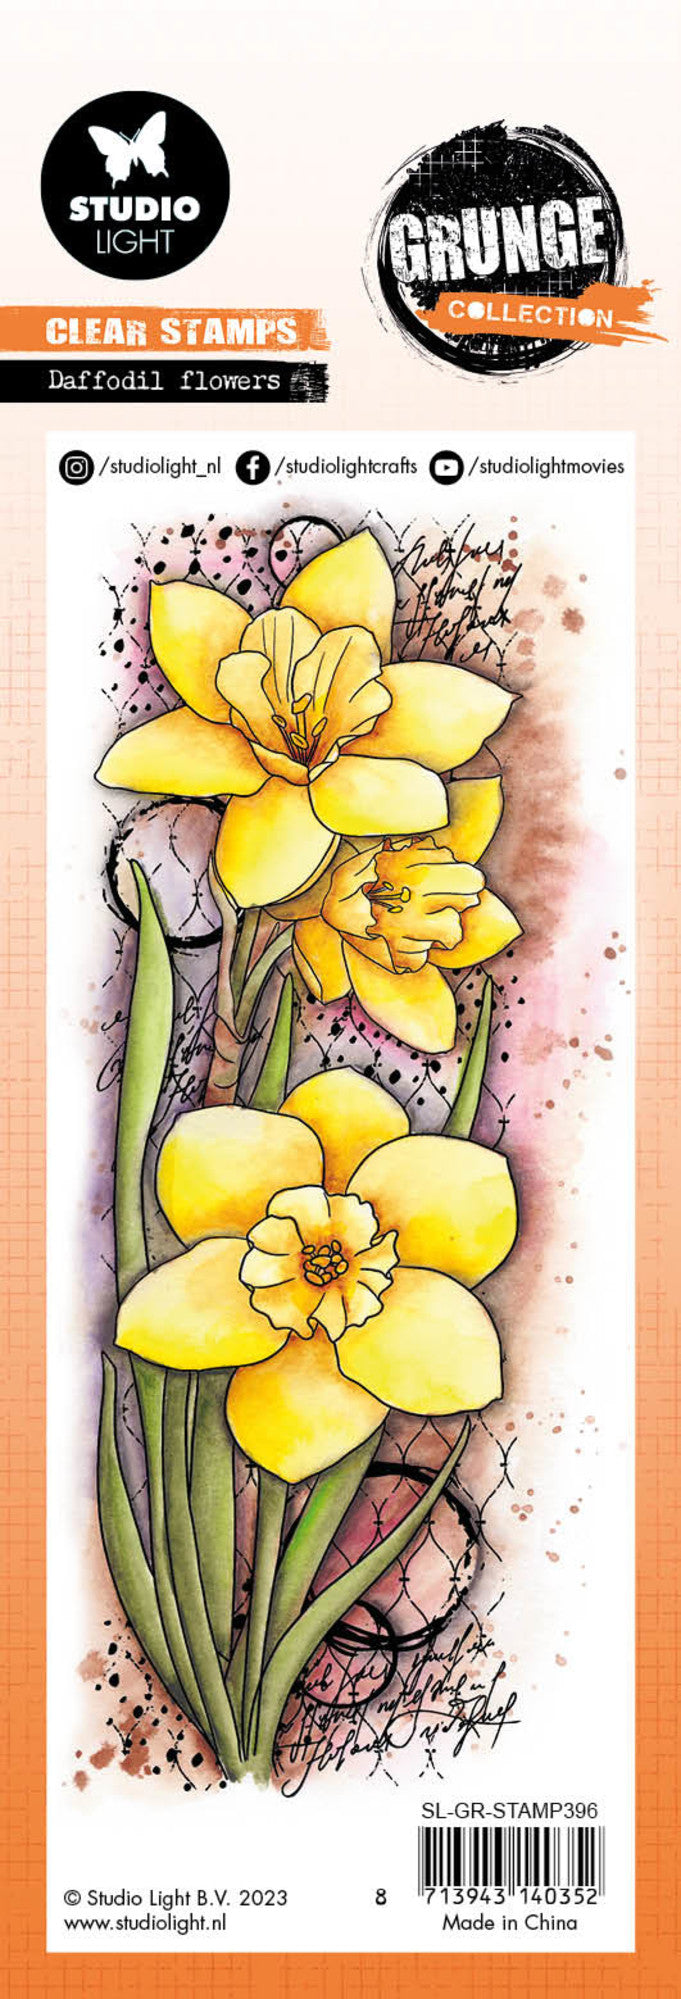 Studio Light - Grunge - Clear Stamp - Daffodil Flowers